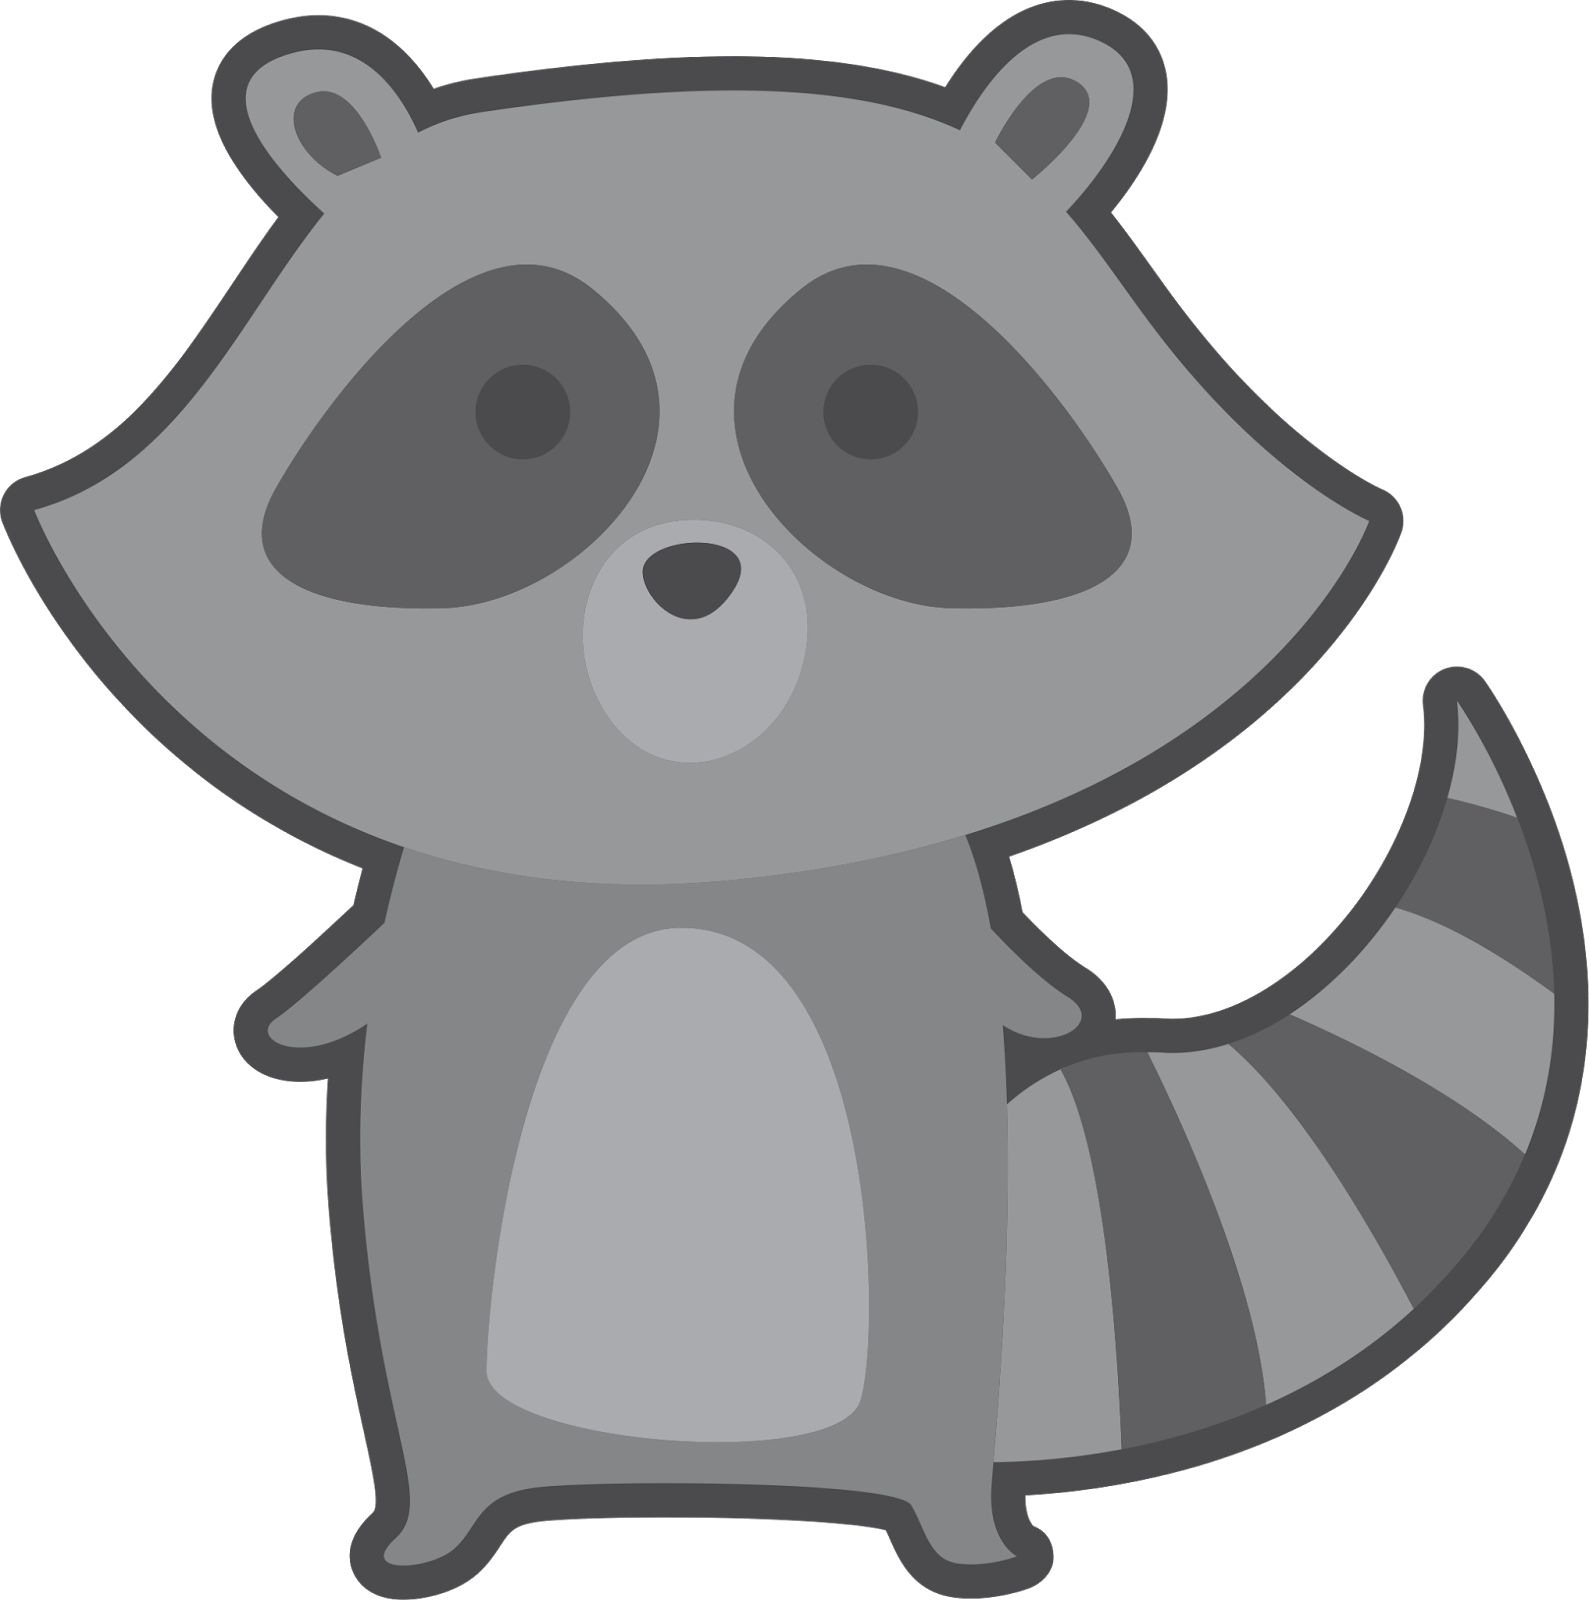 Cute Raccoon PNG HD - 127545